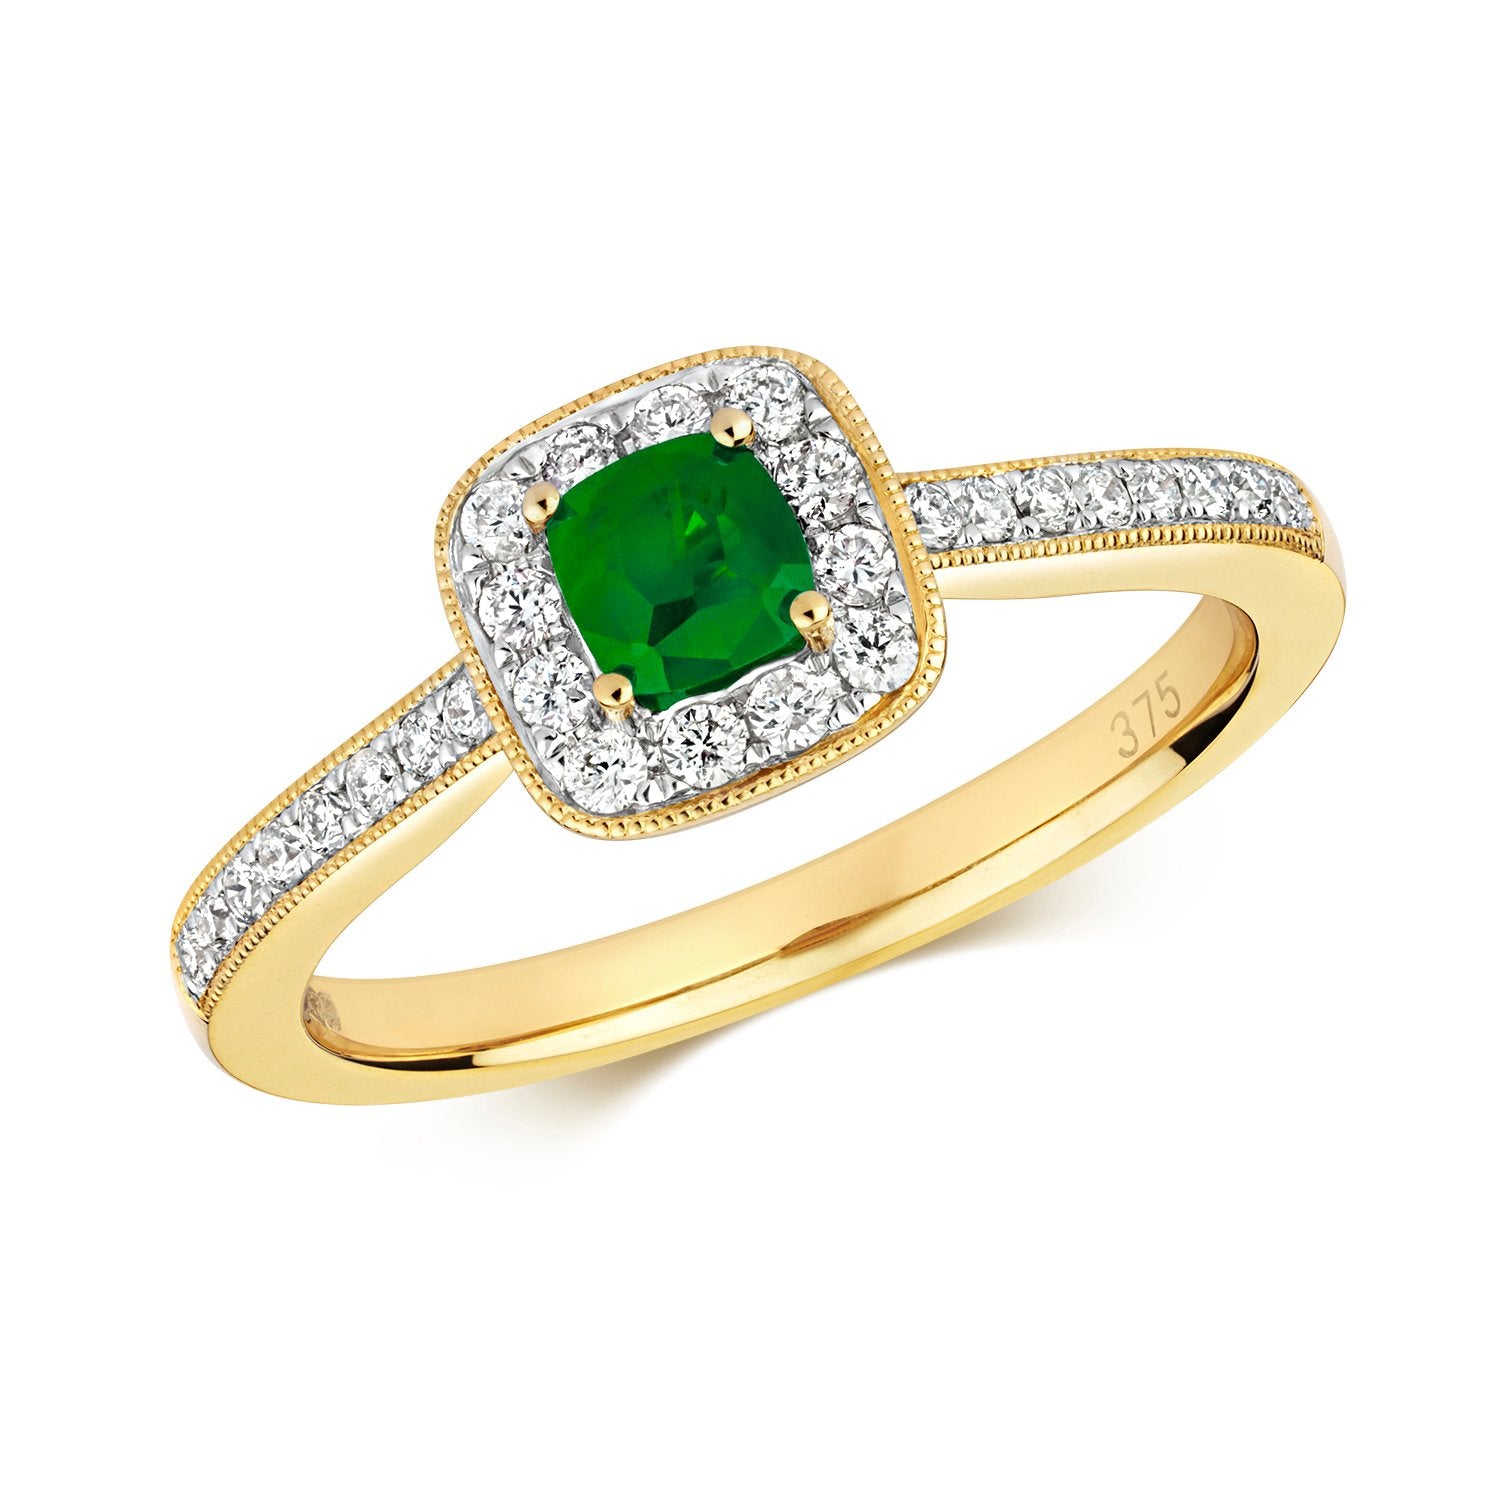 Emerald & Diamond Ring (Rd412e)